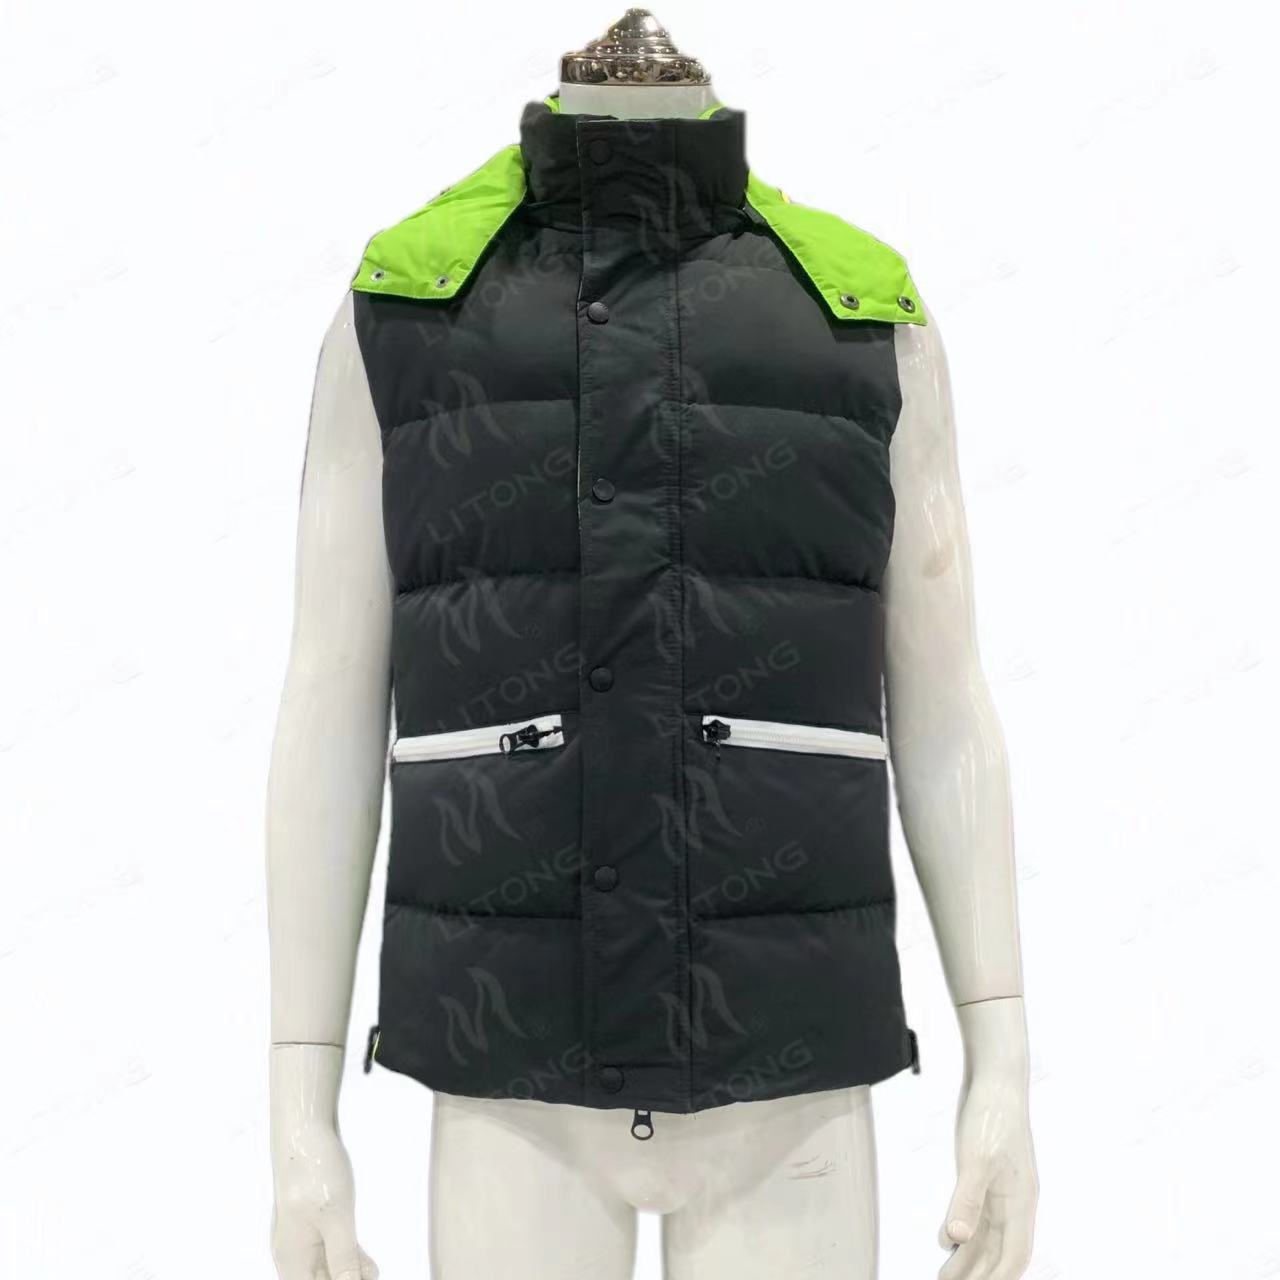 Men's winter puffy vest